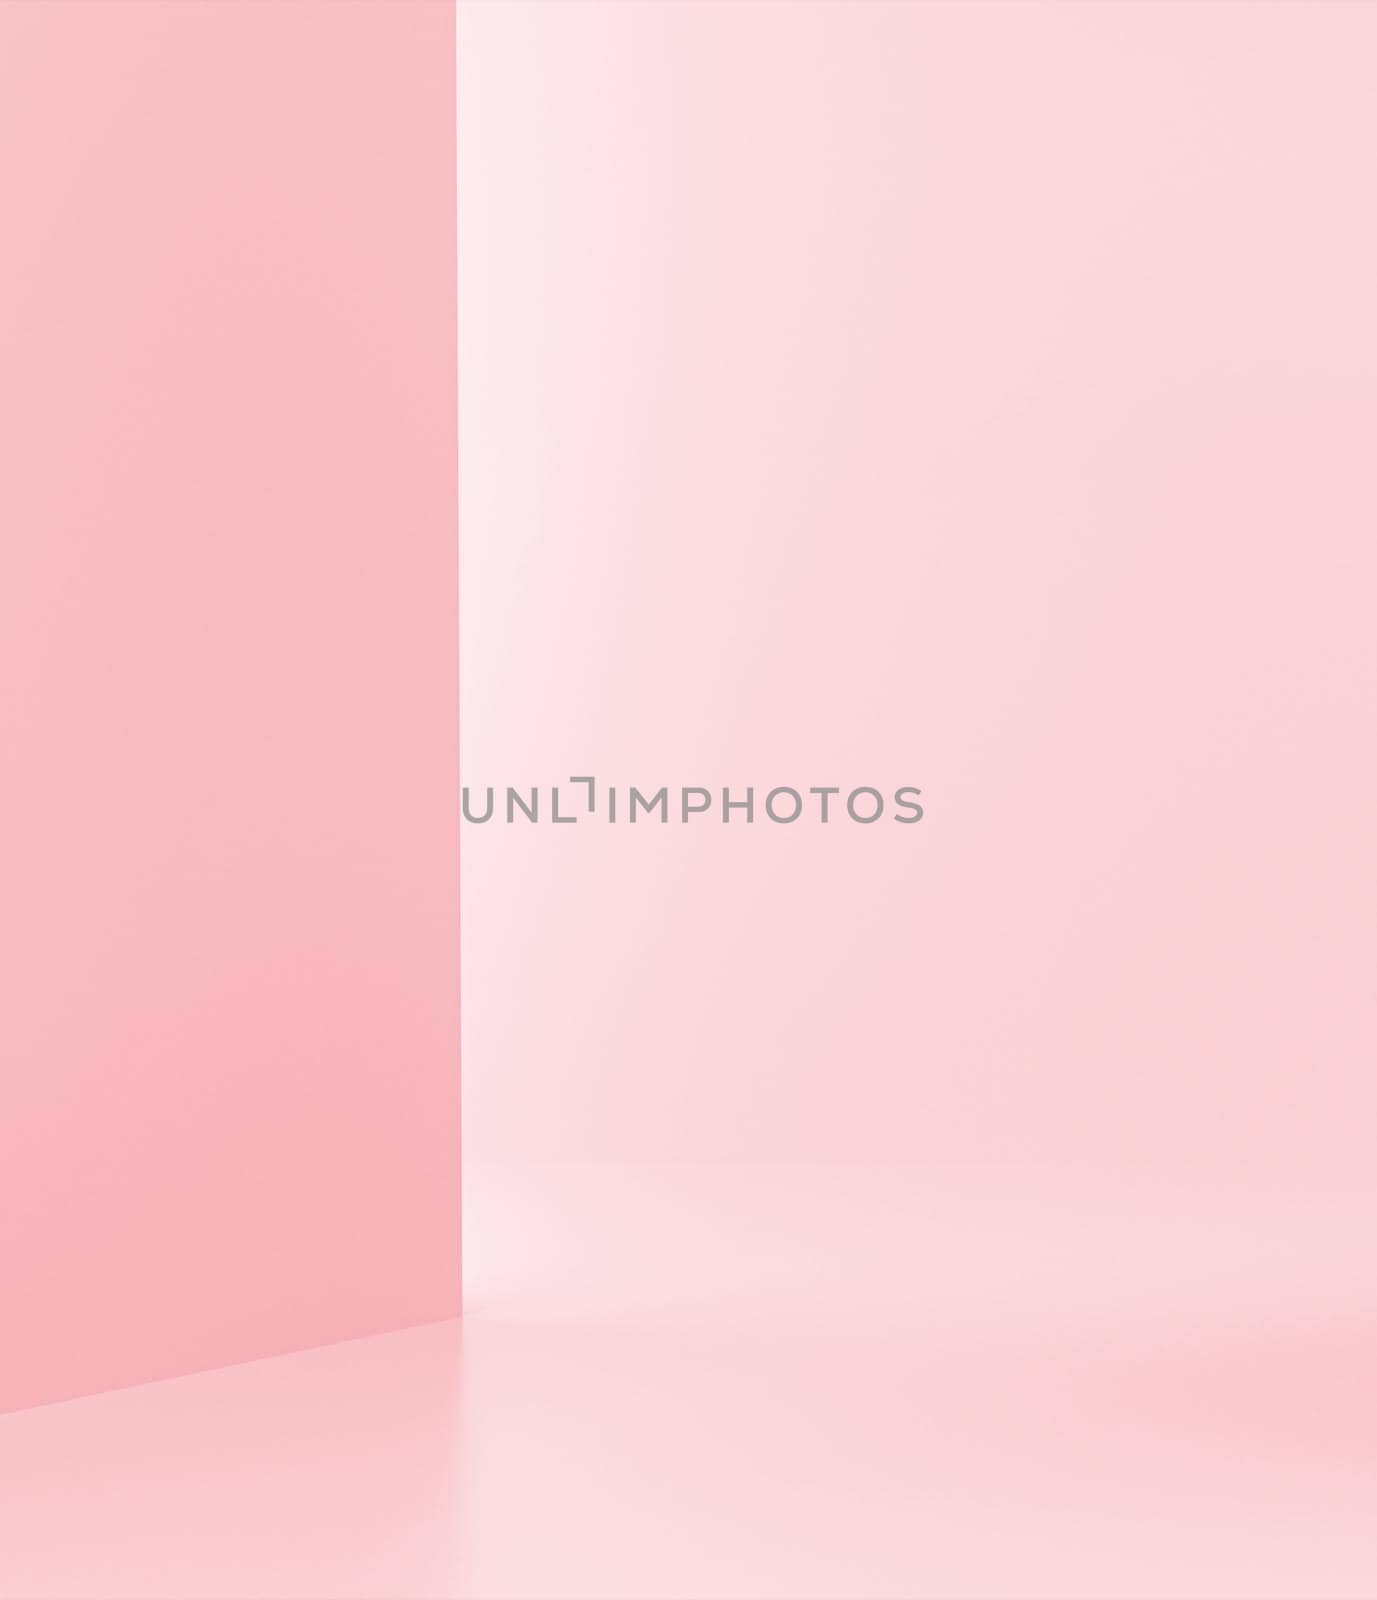 Minimal interior studio light for product presentation on pink background. 3d rendering.